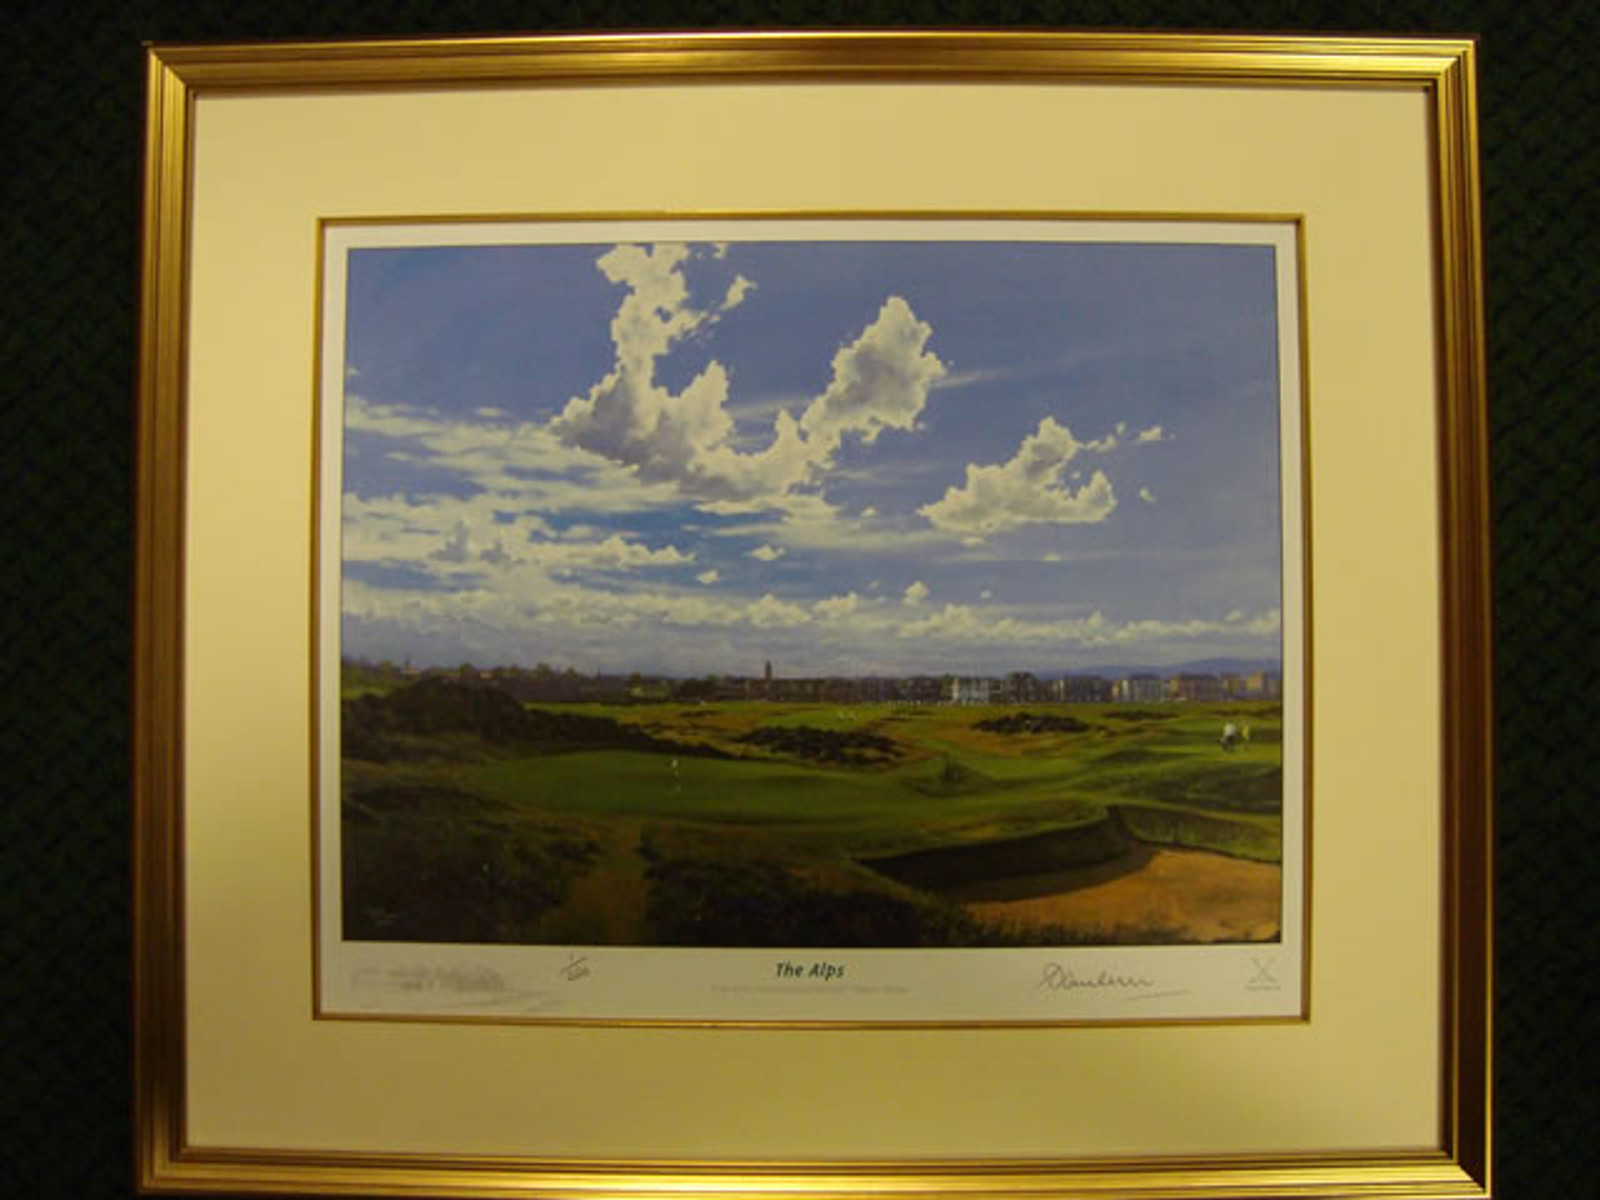 17th Hole, Prestwick Golf Club Limited Edition Print by Craig Campbell (Tubed)